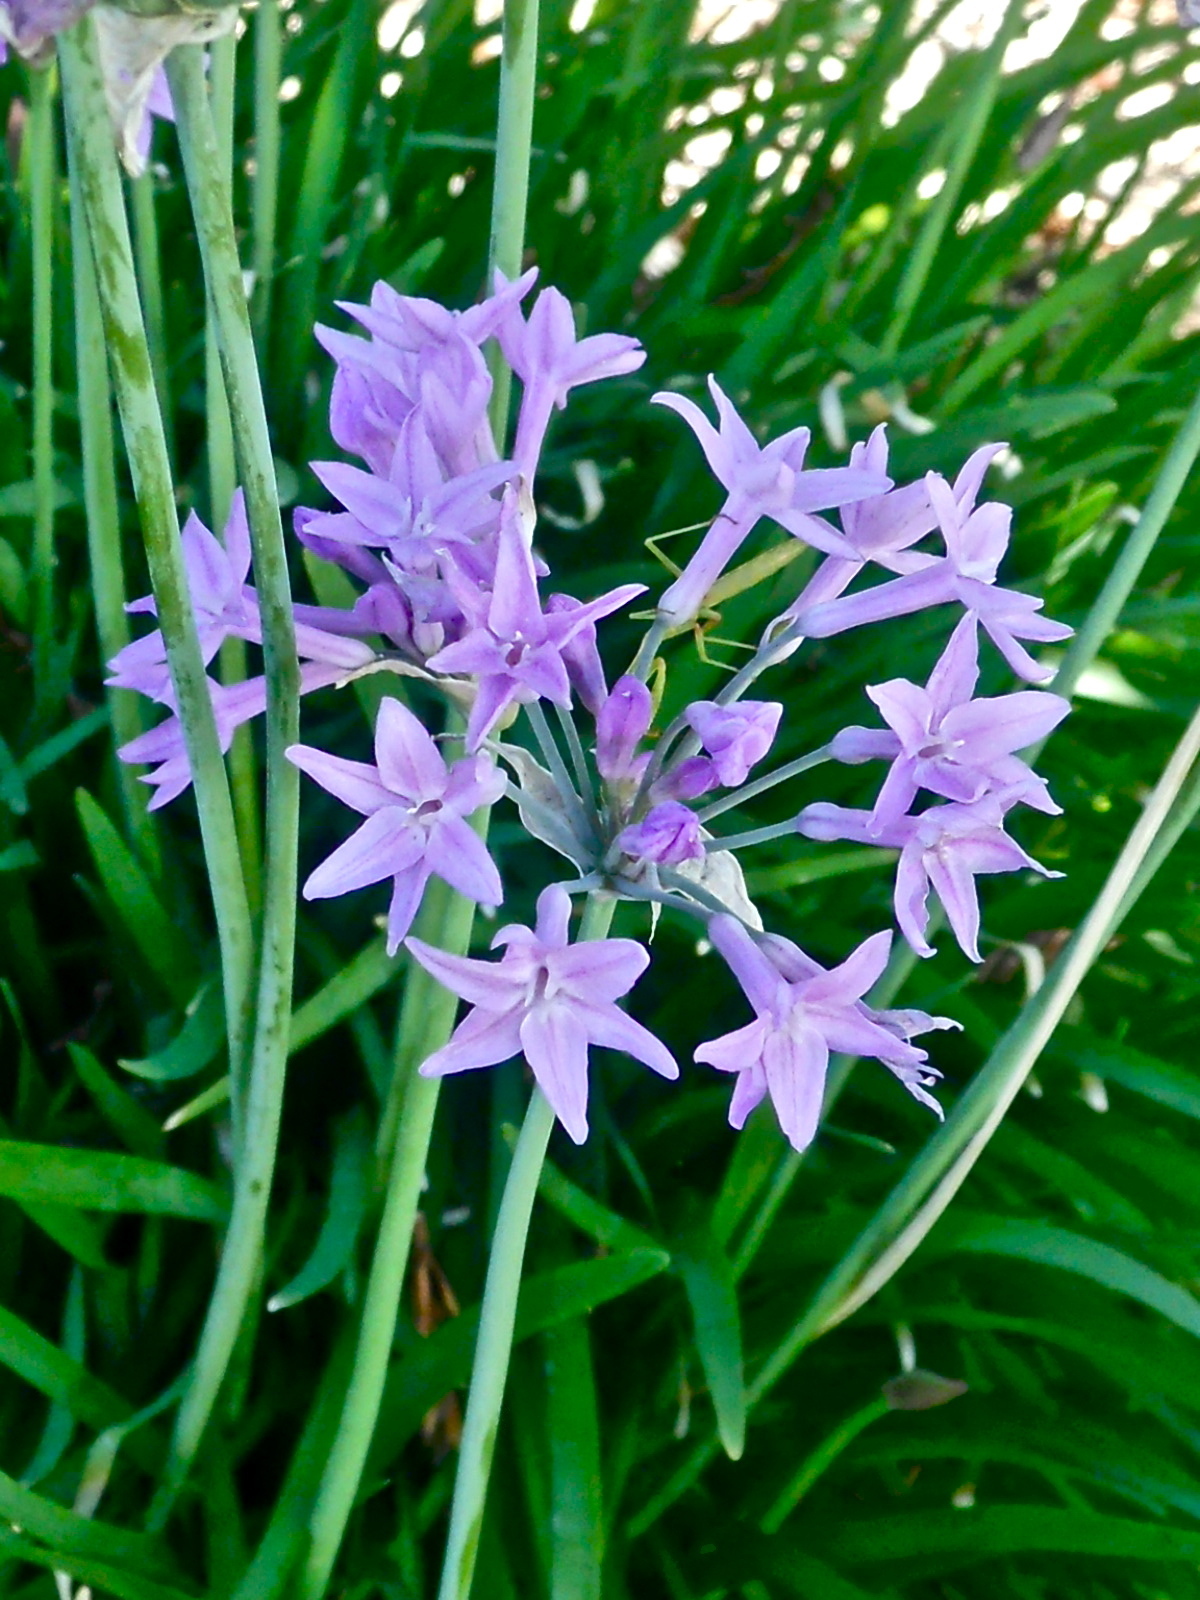 Pretty Violet Flowers - Gardening Photo (16596289) - Fanpop